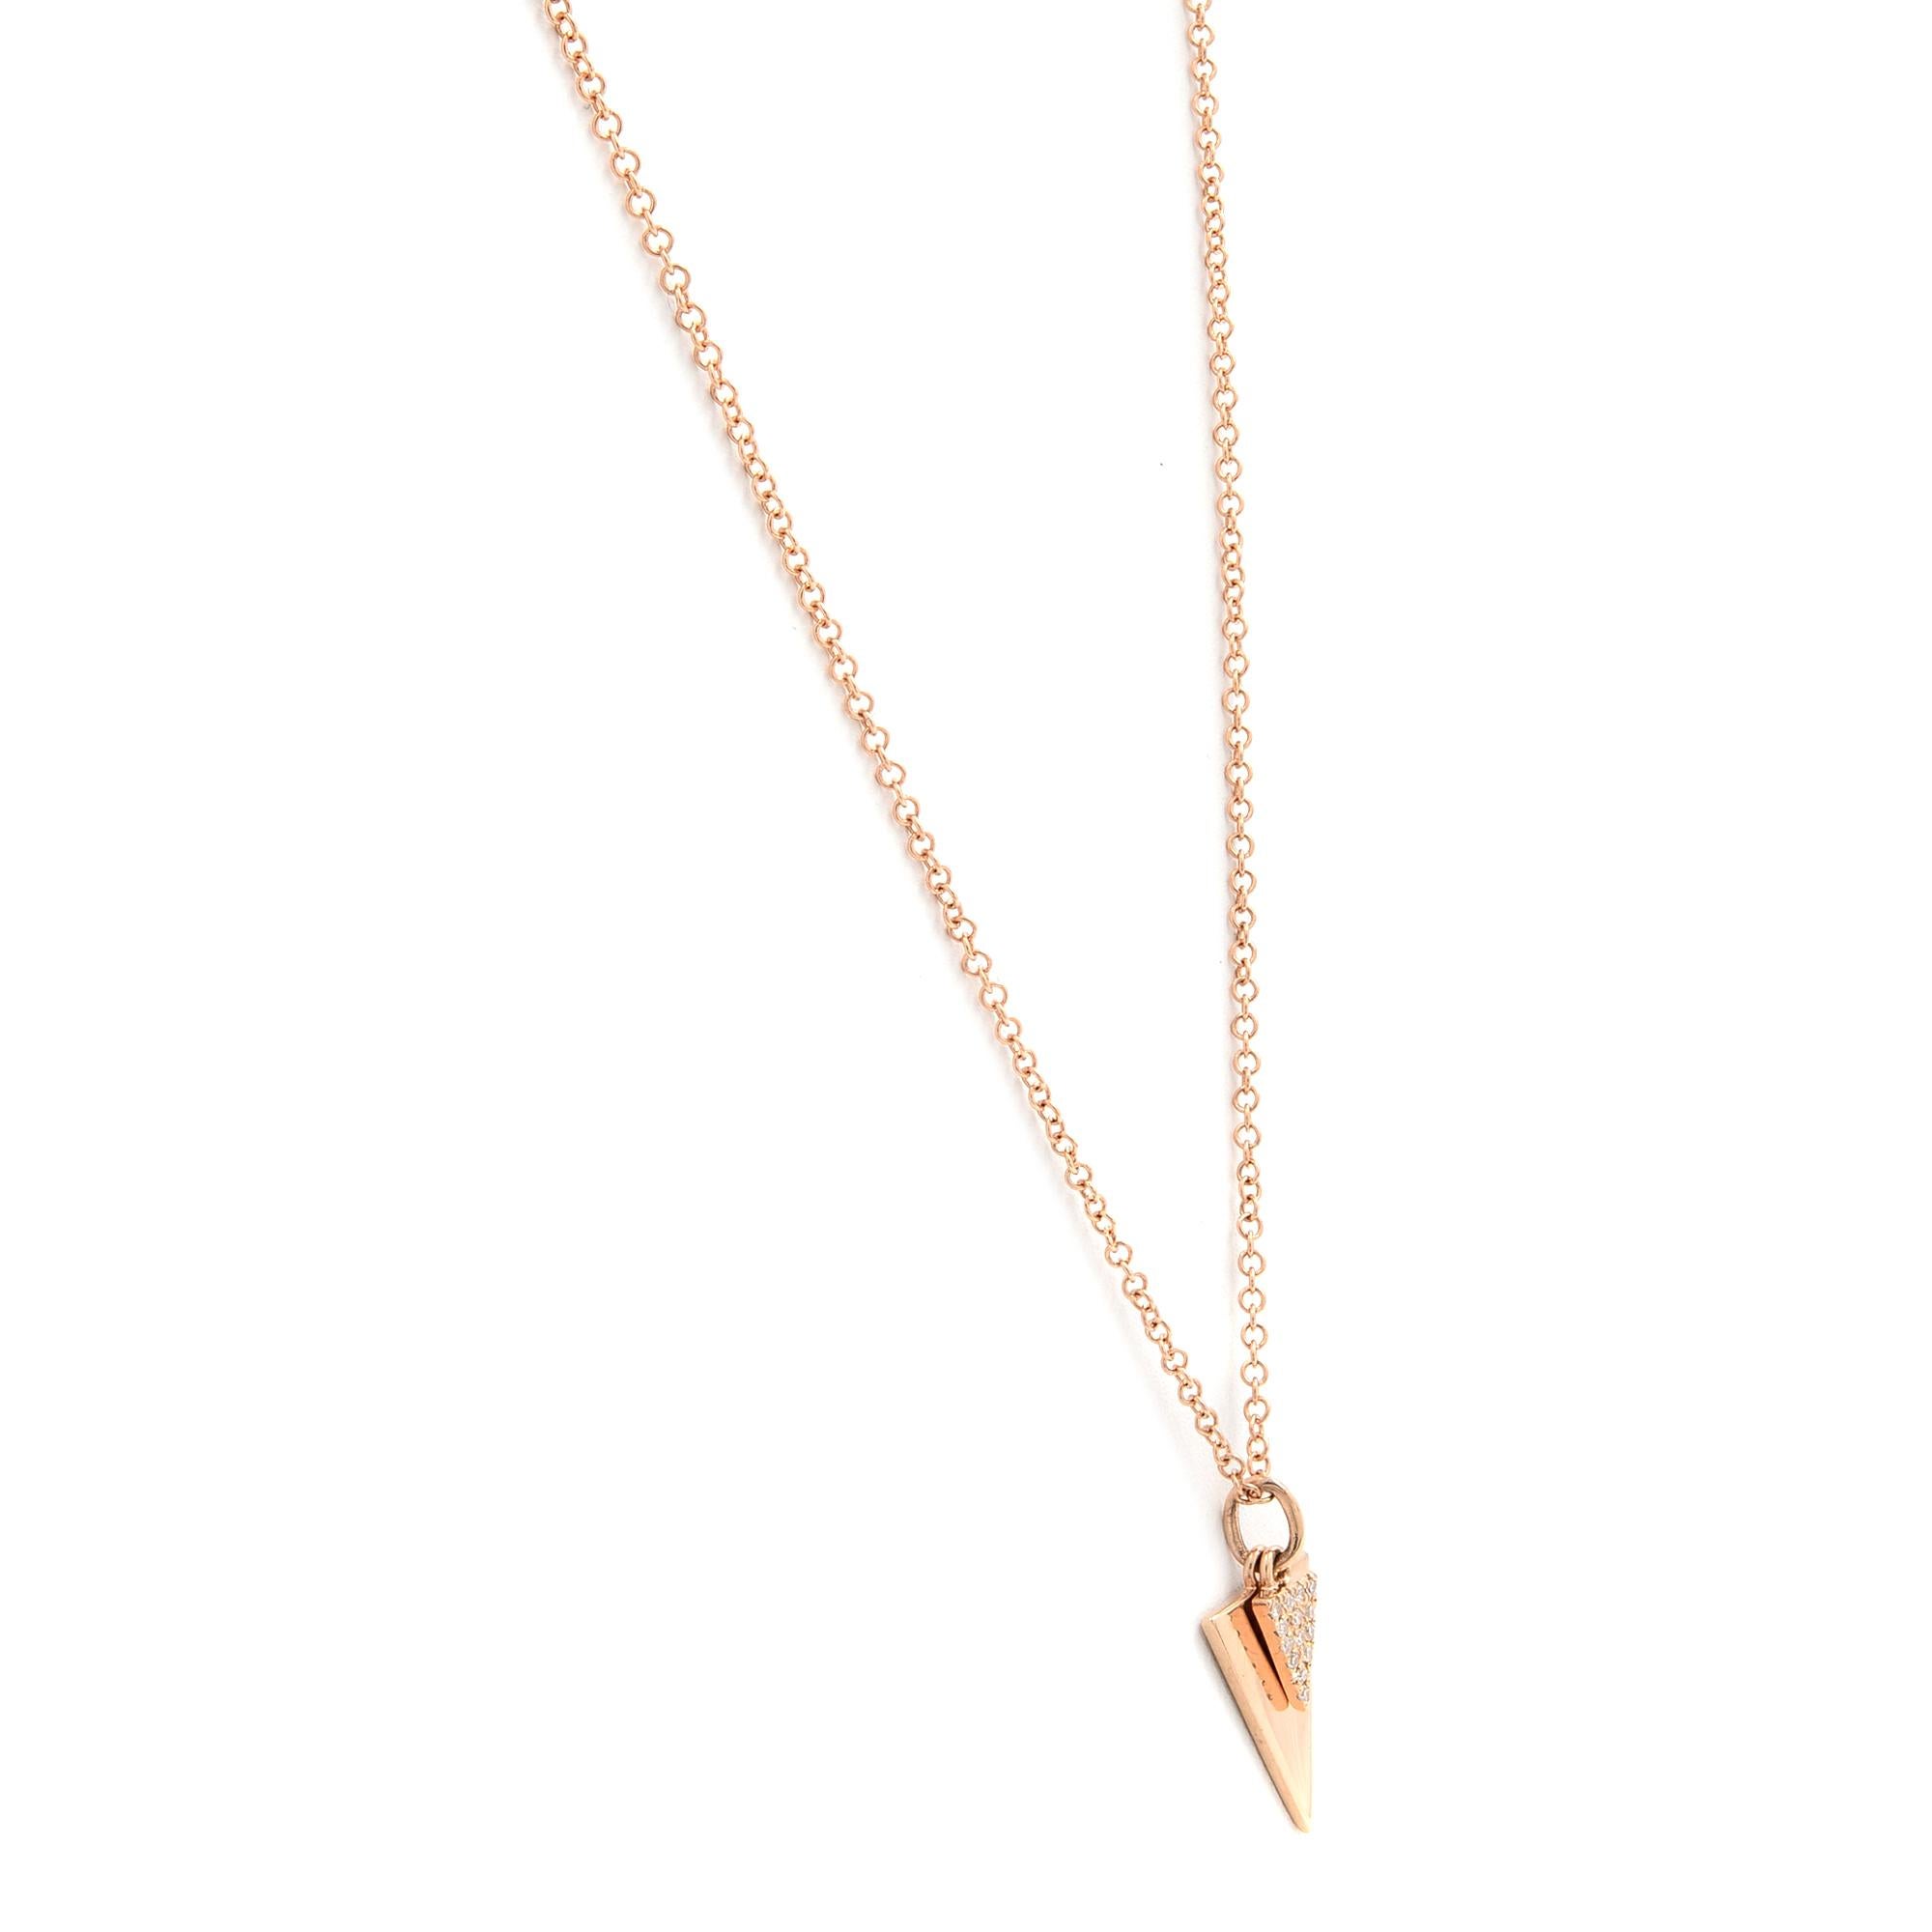 Round Cut Rachel Koen Diamond Triangle Necklace 14K Rose Gold 0.03Cttw For Sale